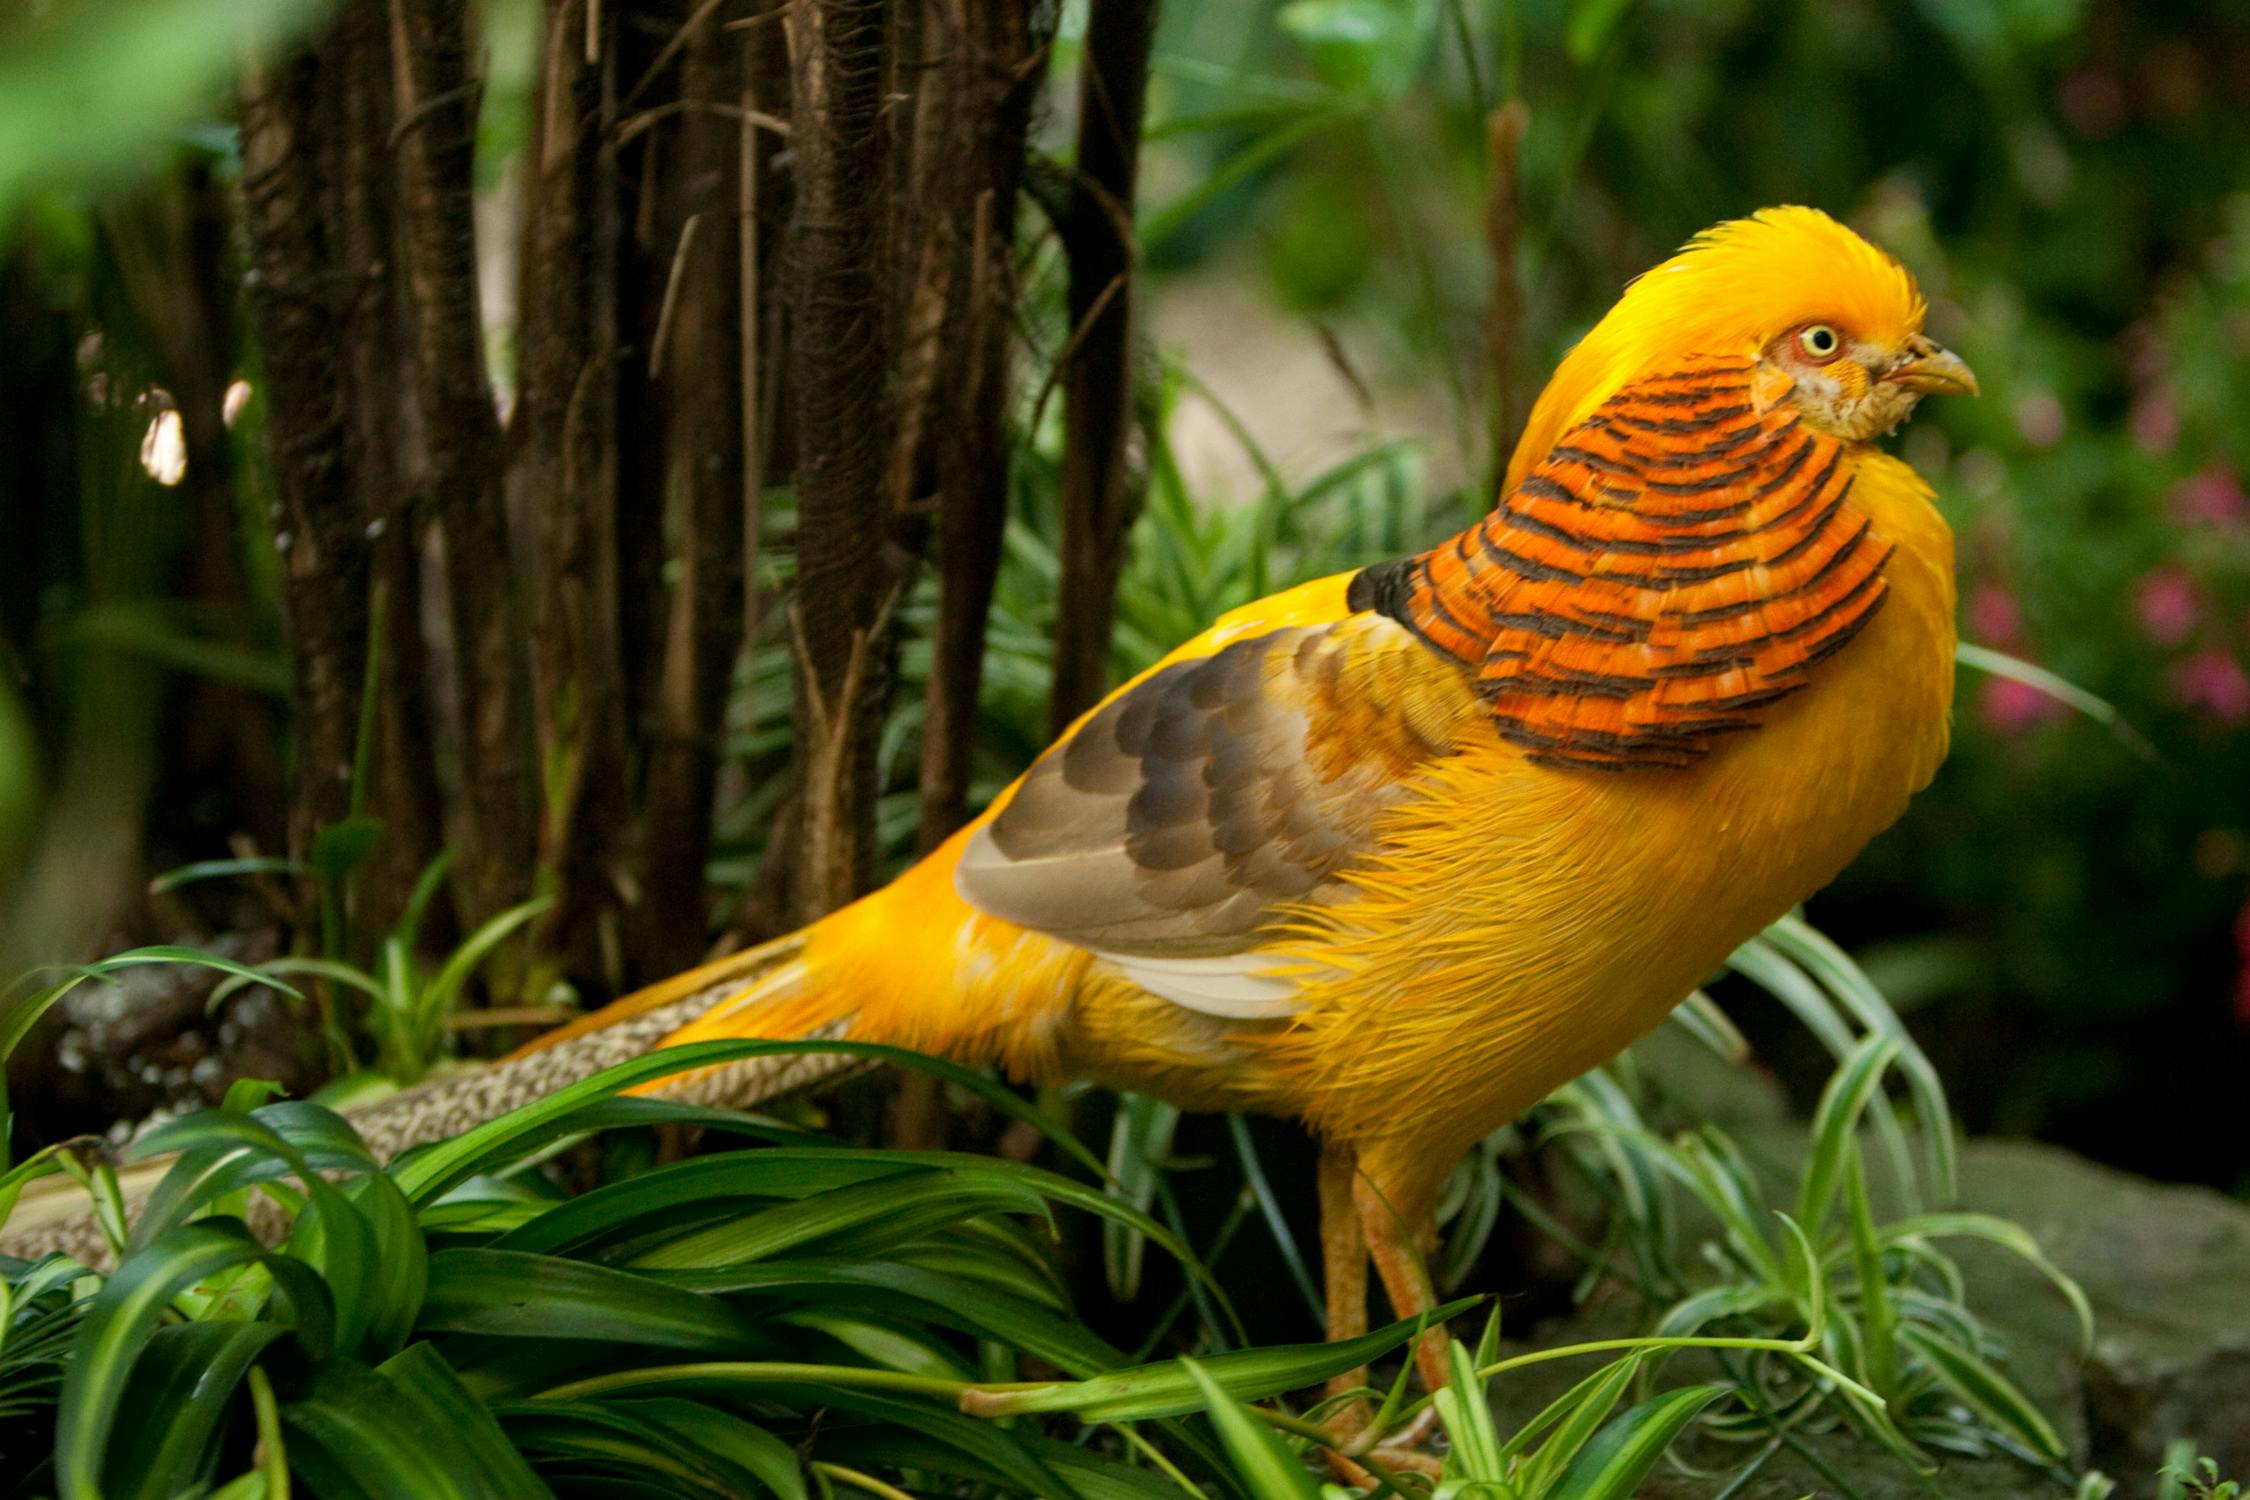 Golden Bird Photo by Jeffry Surianto from Pexels: https://www.pexels.com/photo/yellow-and-orange-bird-on-green-plant-11089257/